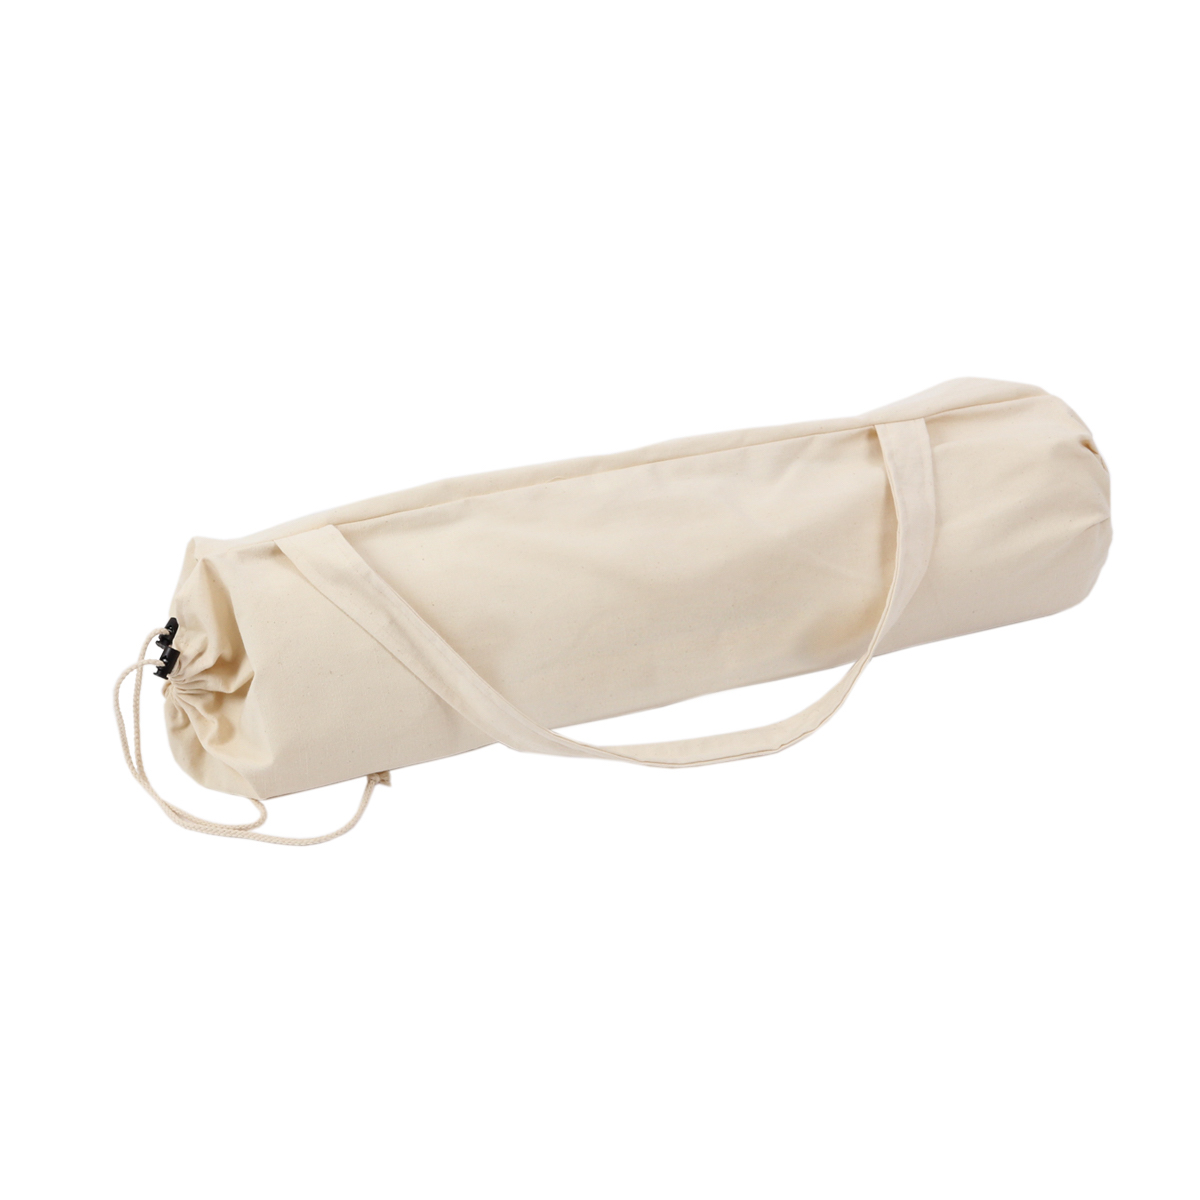 Ruskovilla's Cotton bag for yoga mat